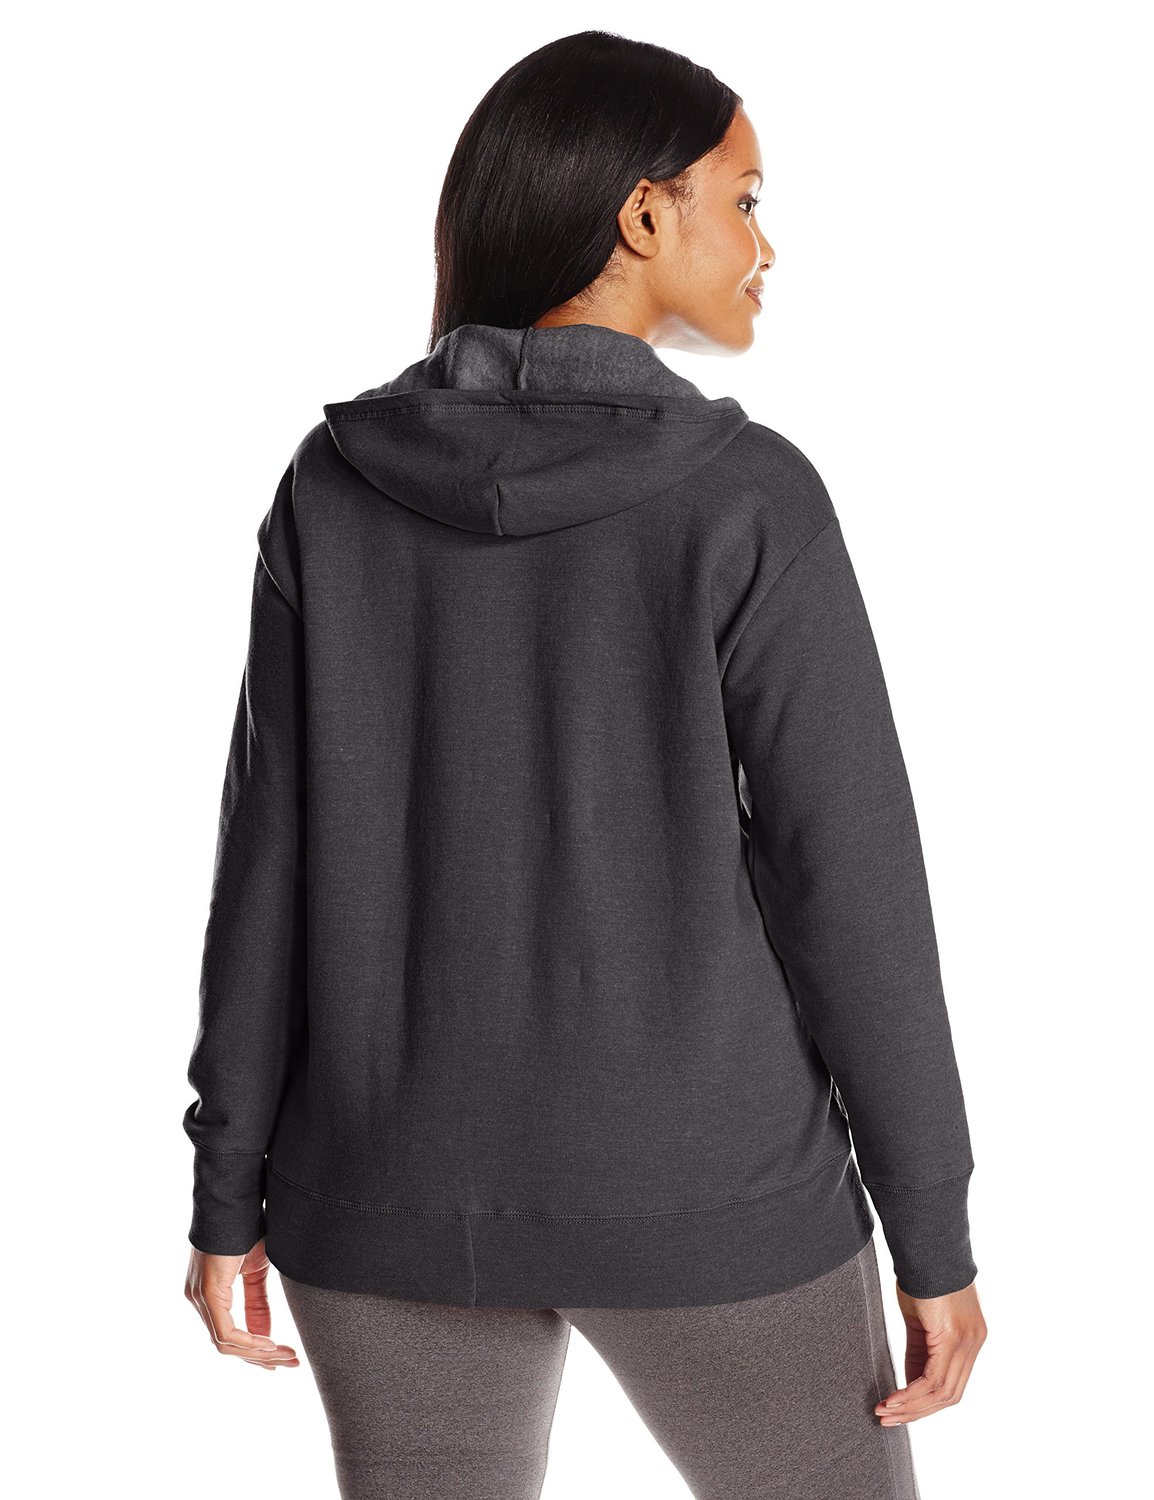 JMS by Hanes Women's Plus Size Fleece Zip Hood Jacket - image 2 of 6